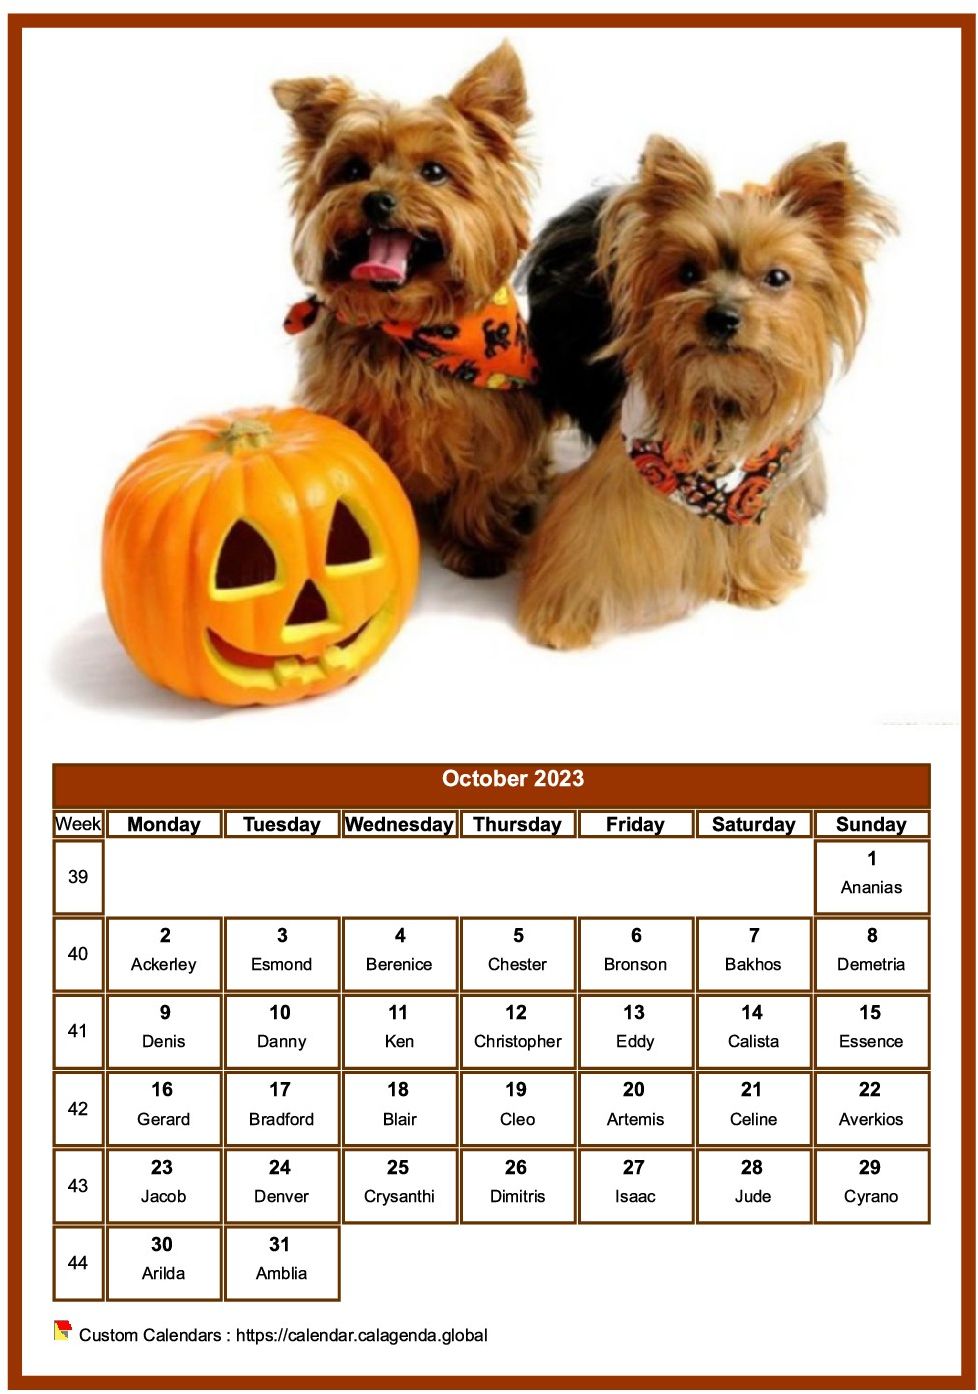 Calendar October 2023 dogs